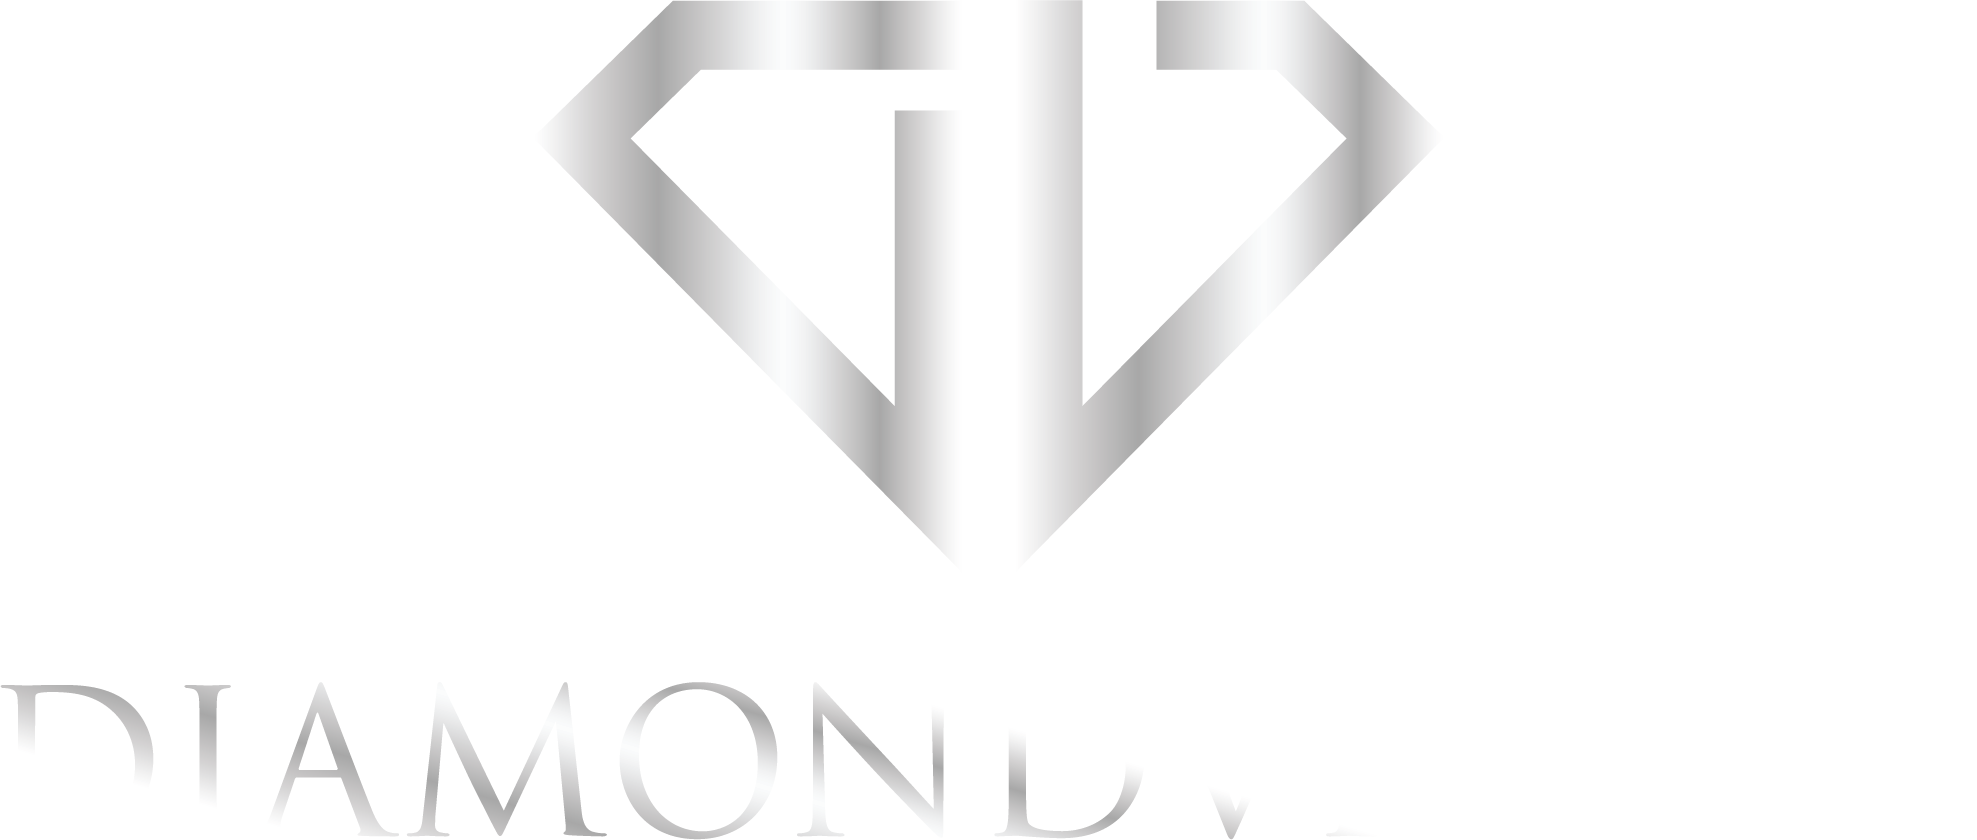 Diamondvideos Logo